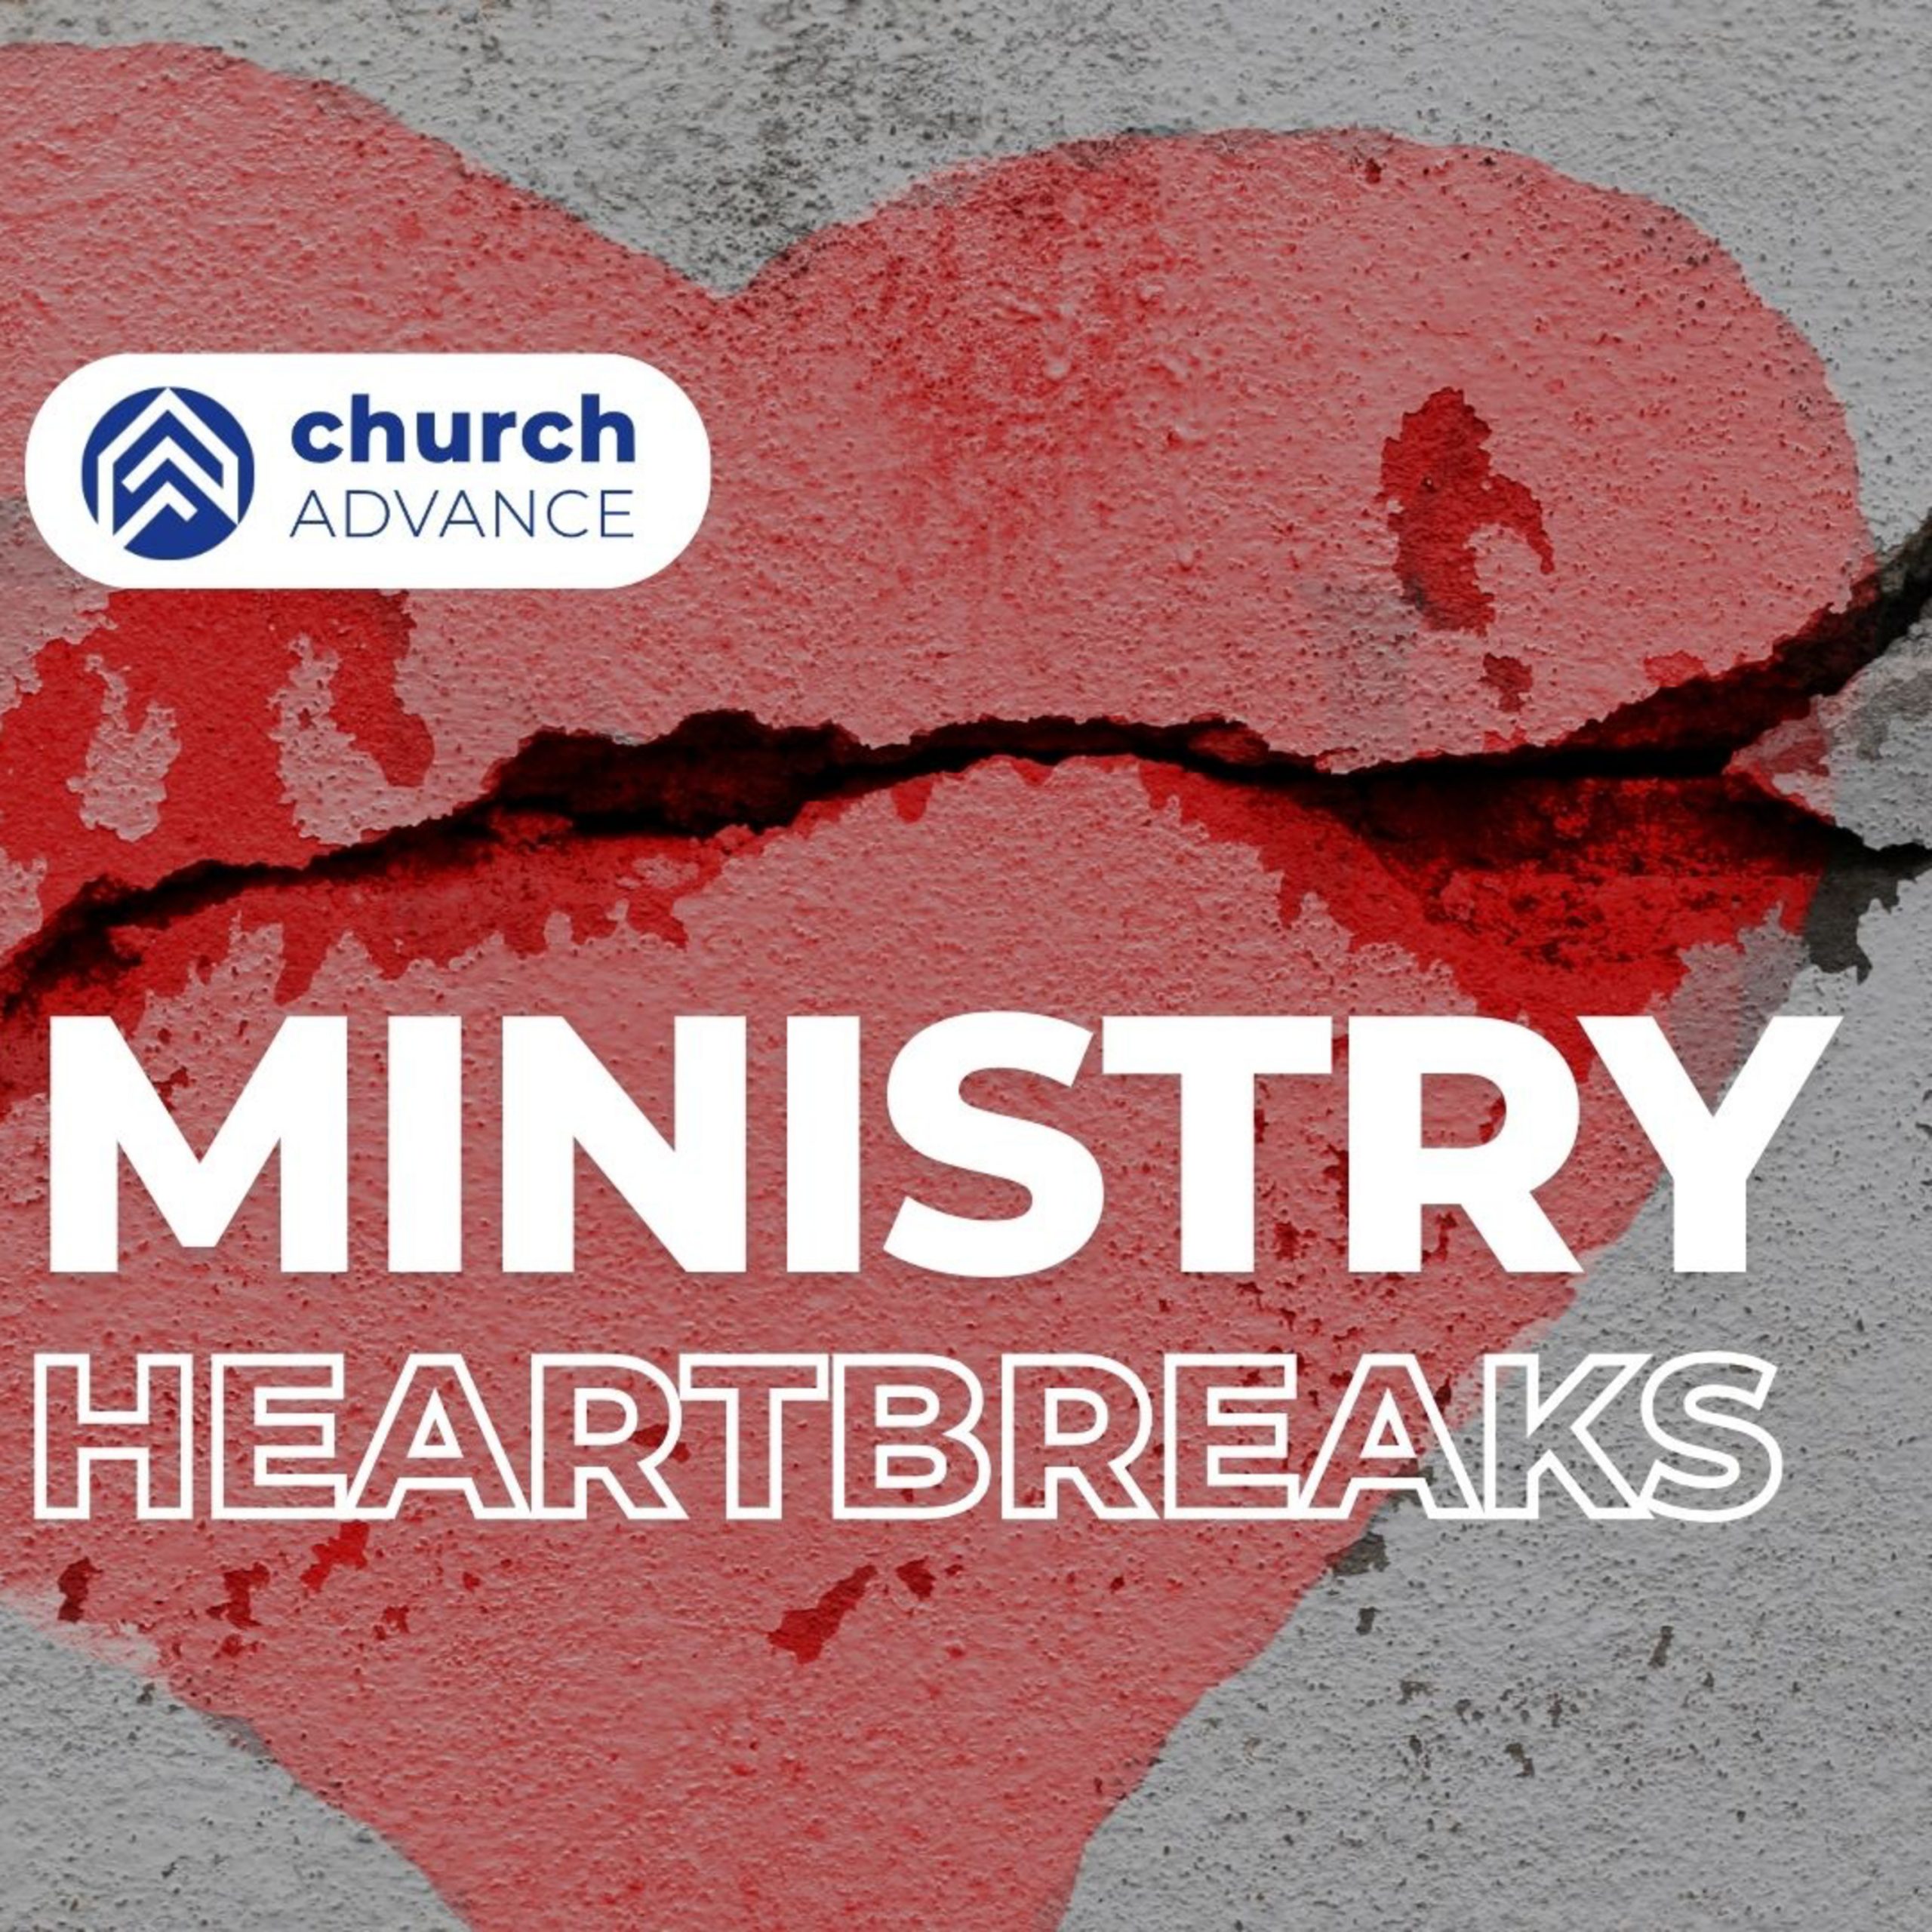 The Heartbreaks of Ministry